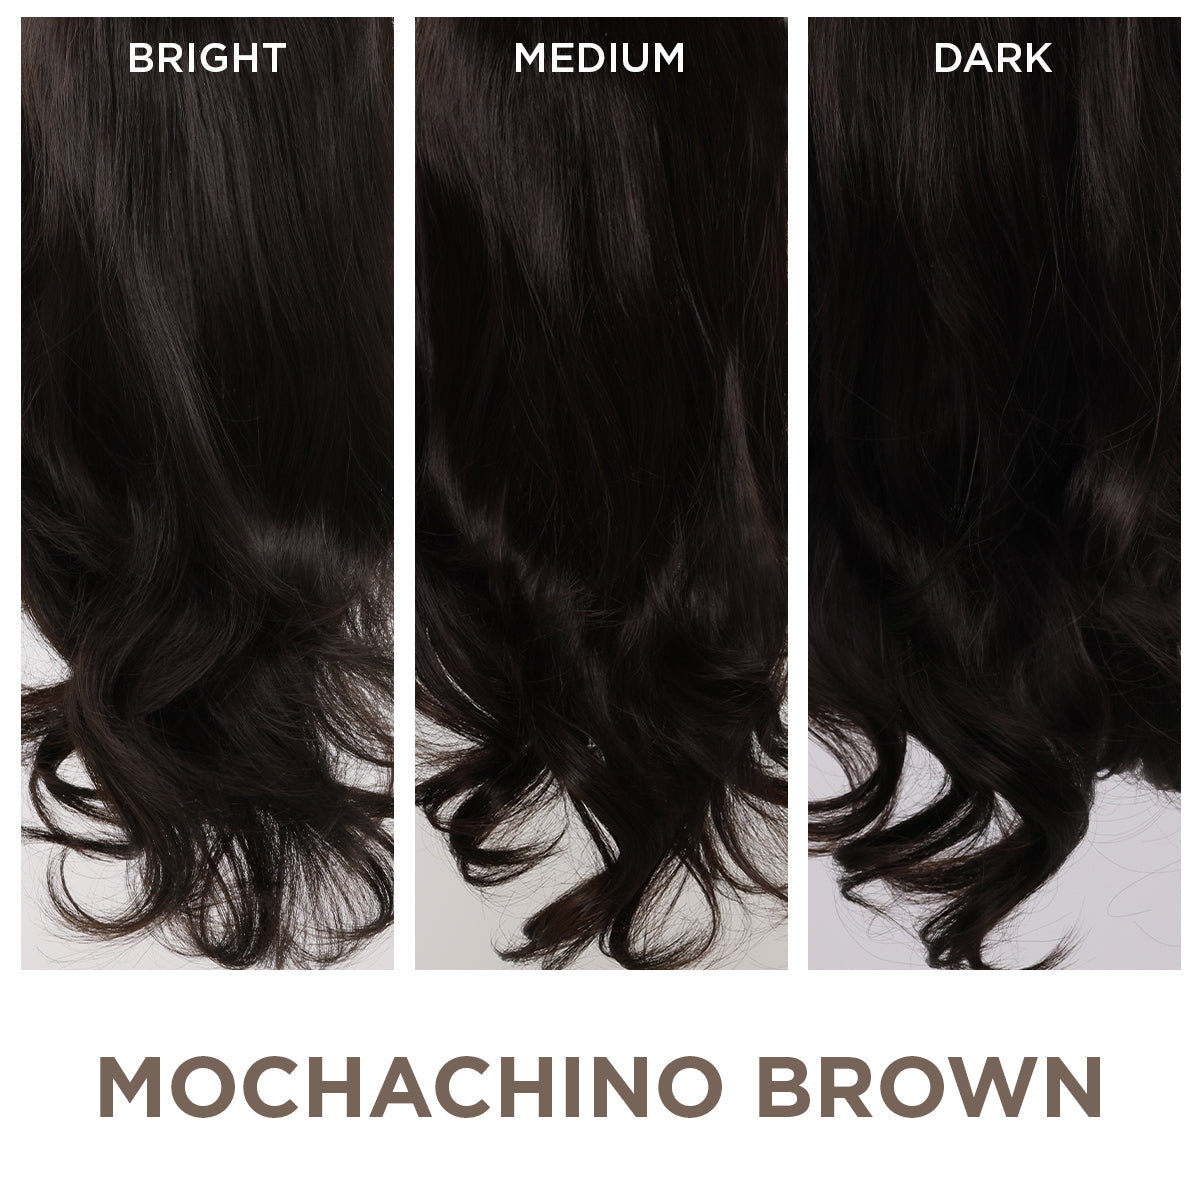 Mochachino Brown